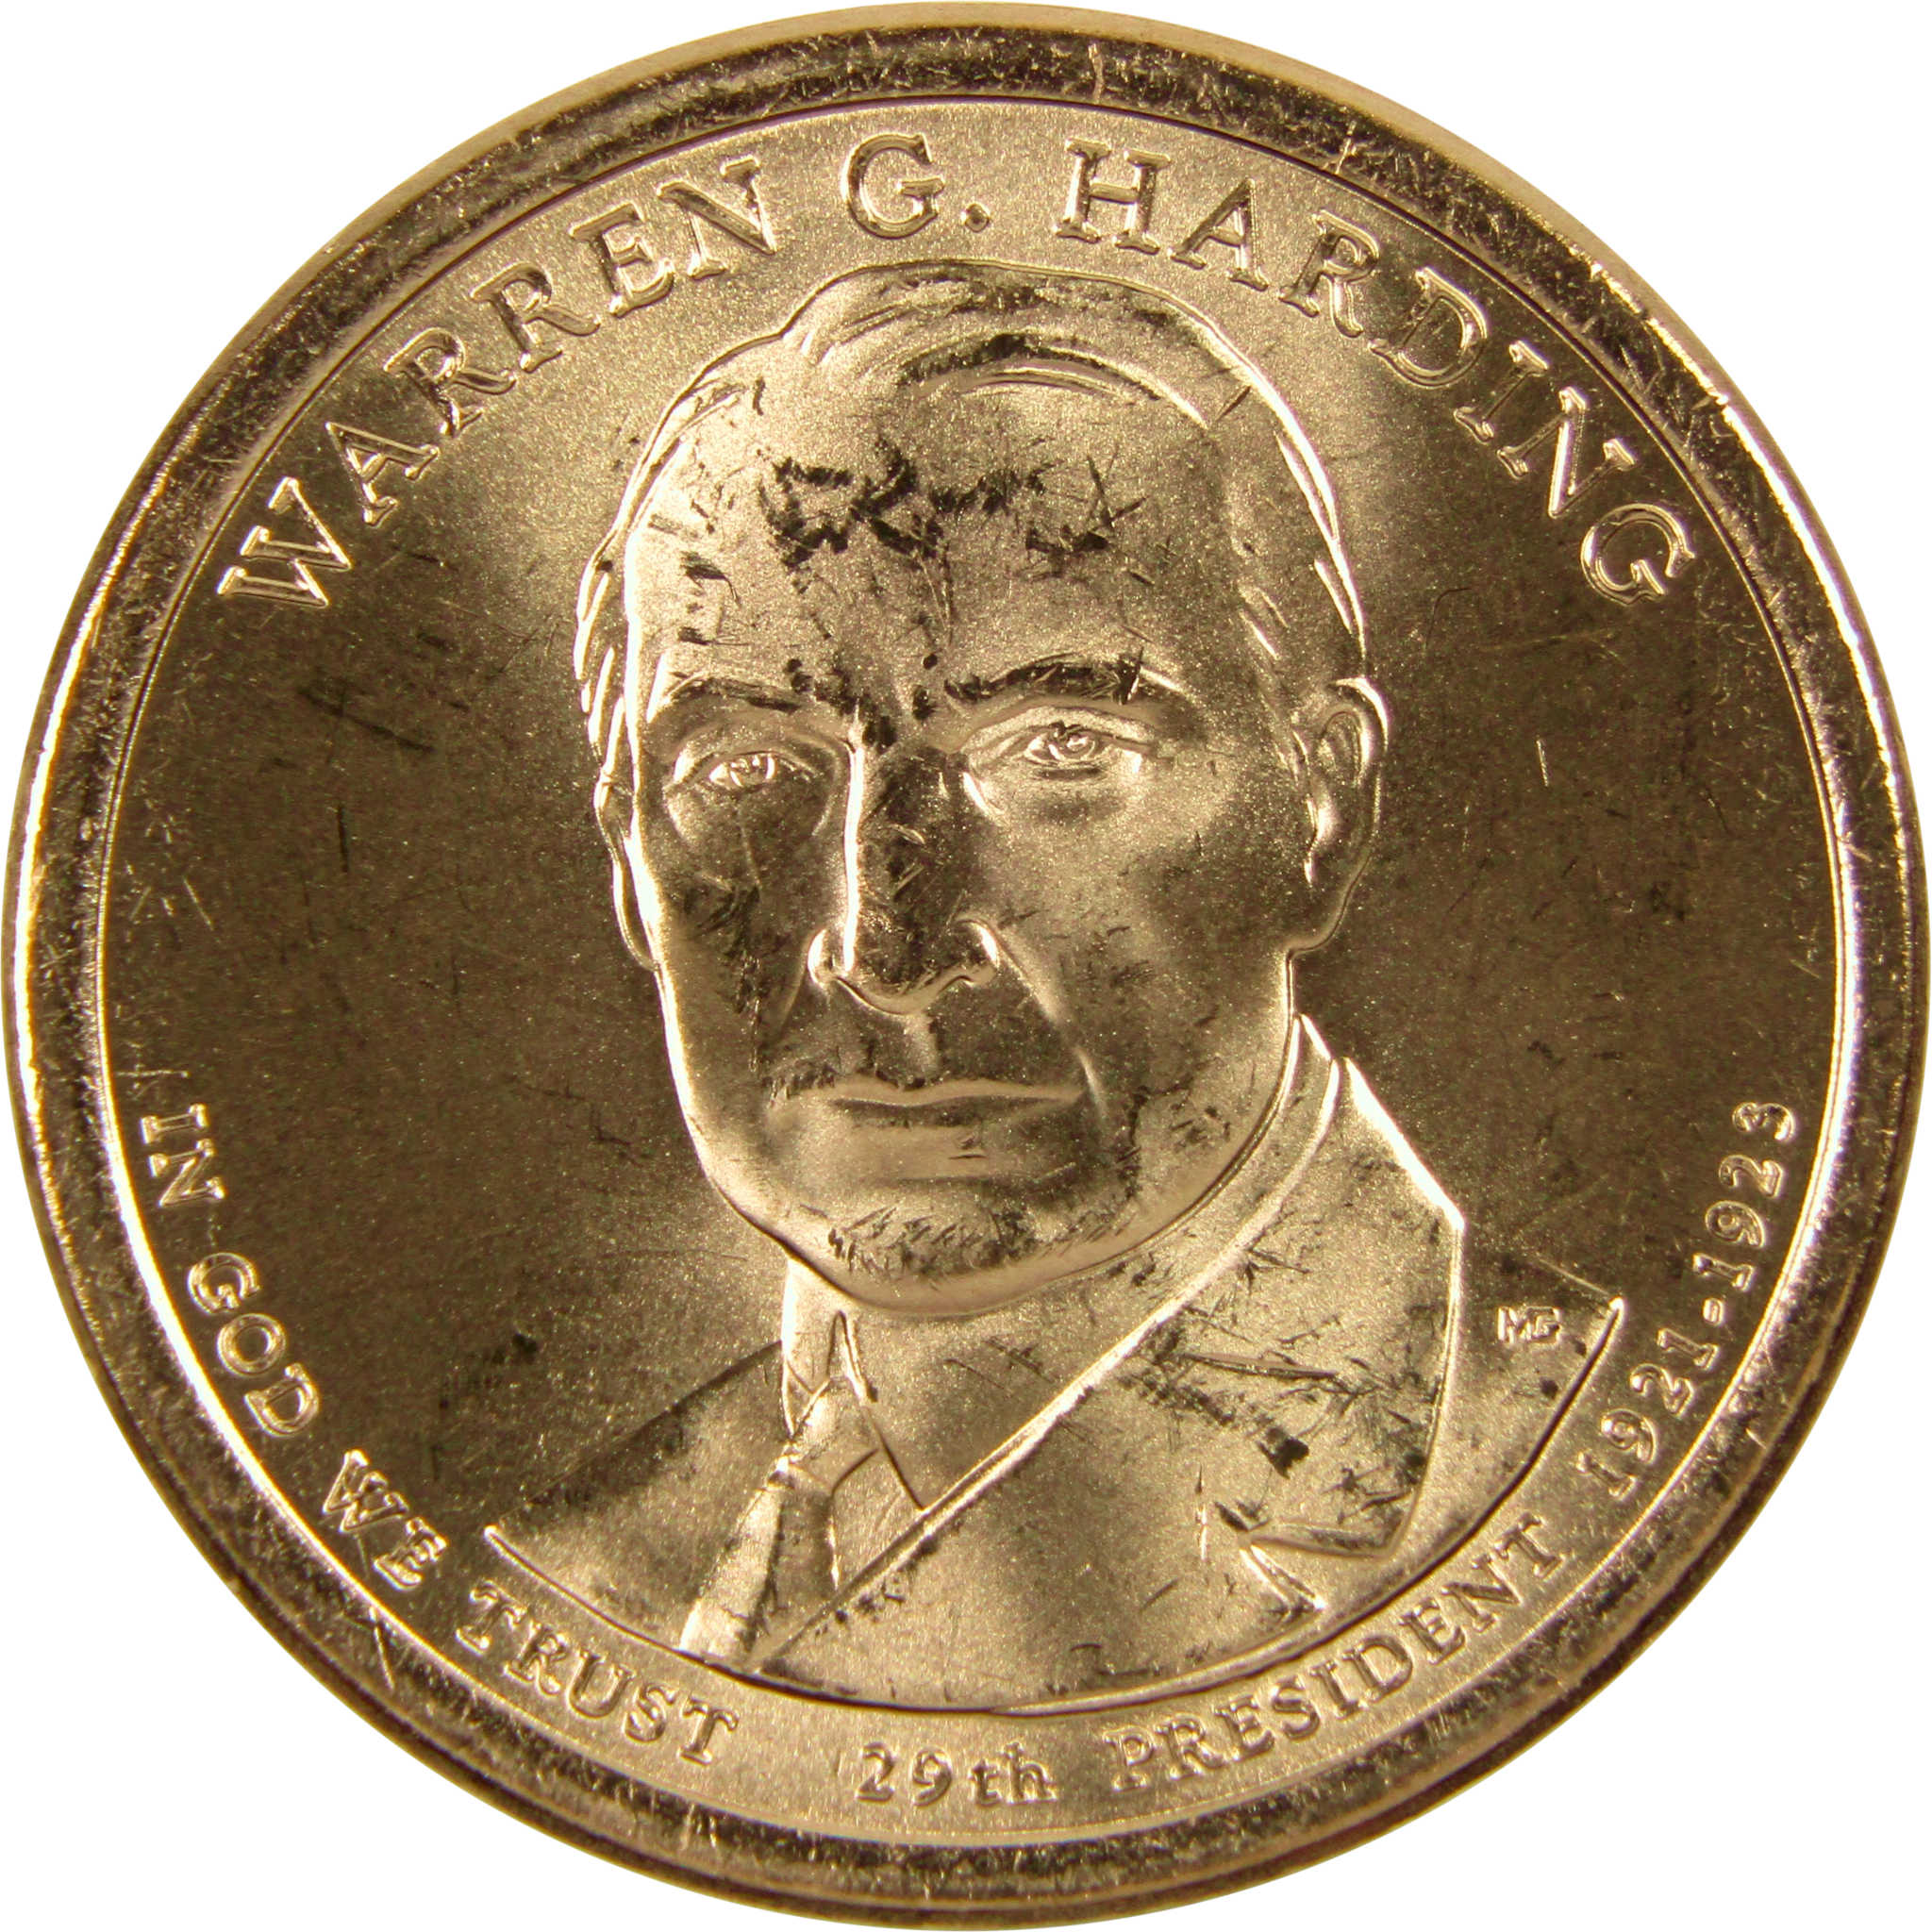 2014 P Warren G Harding Presidential Dollar BU Uncirculated $1 Coin